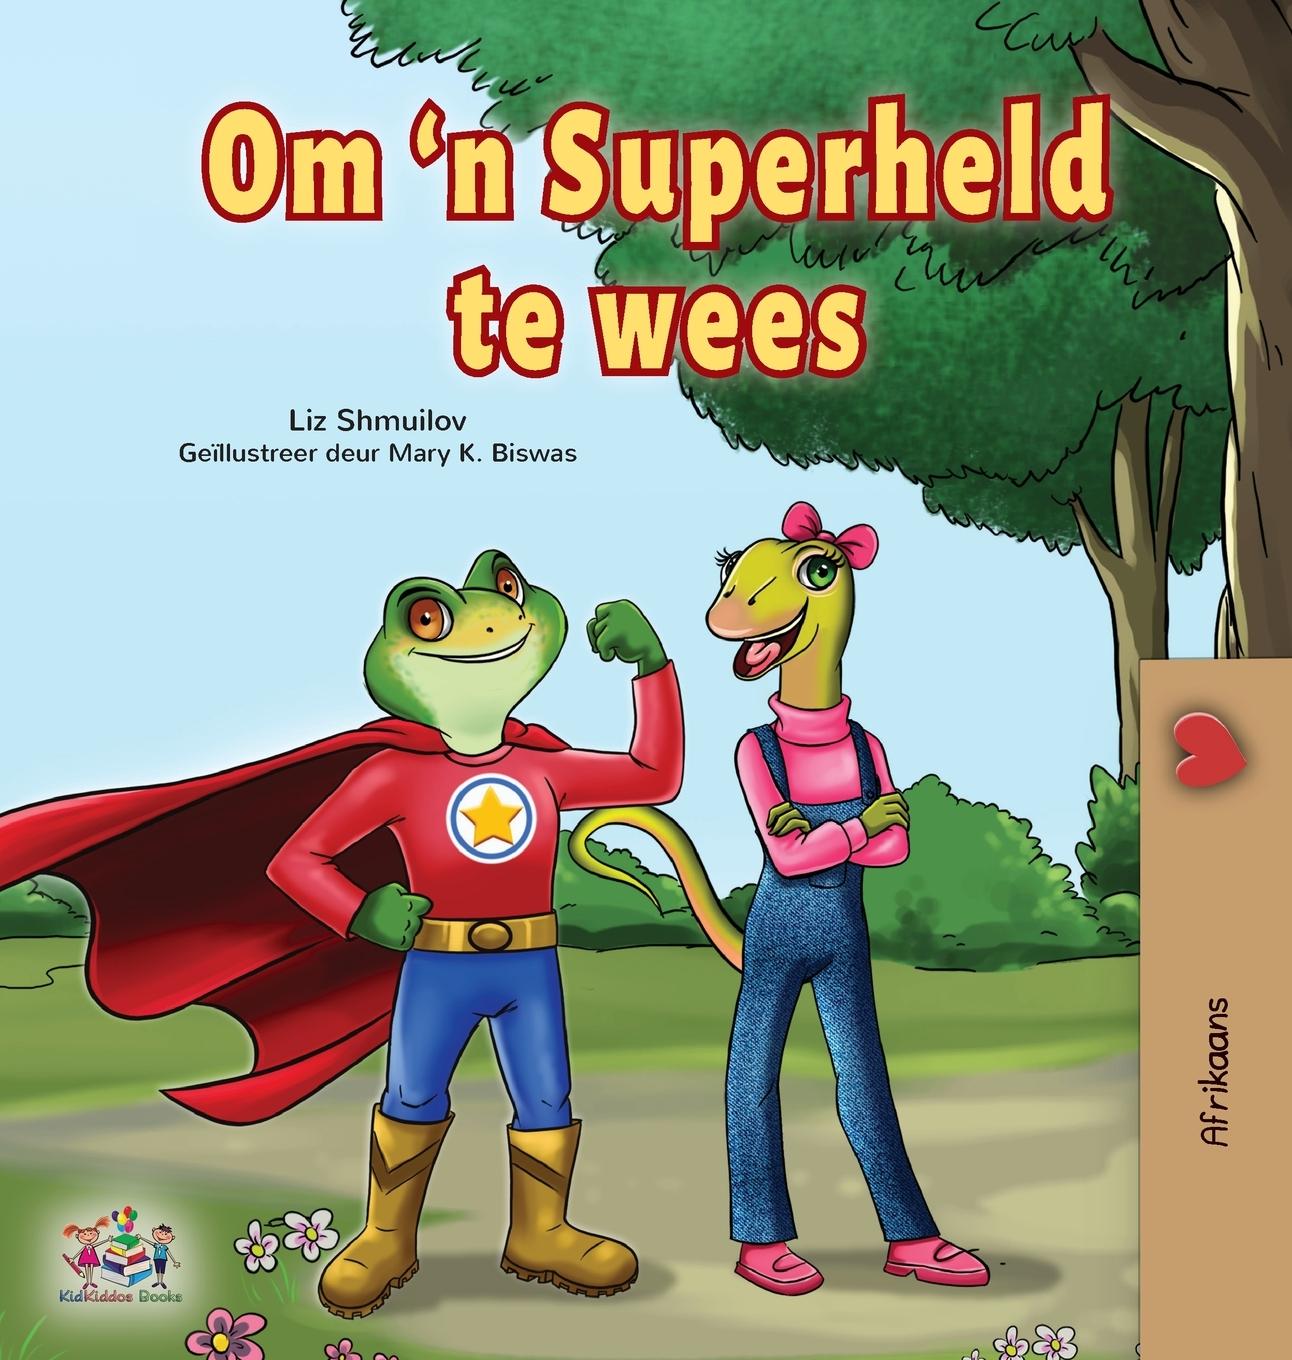 Book Being a Superhero (Afrikaans Children's Book) Kidkiddos Books